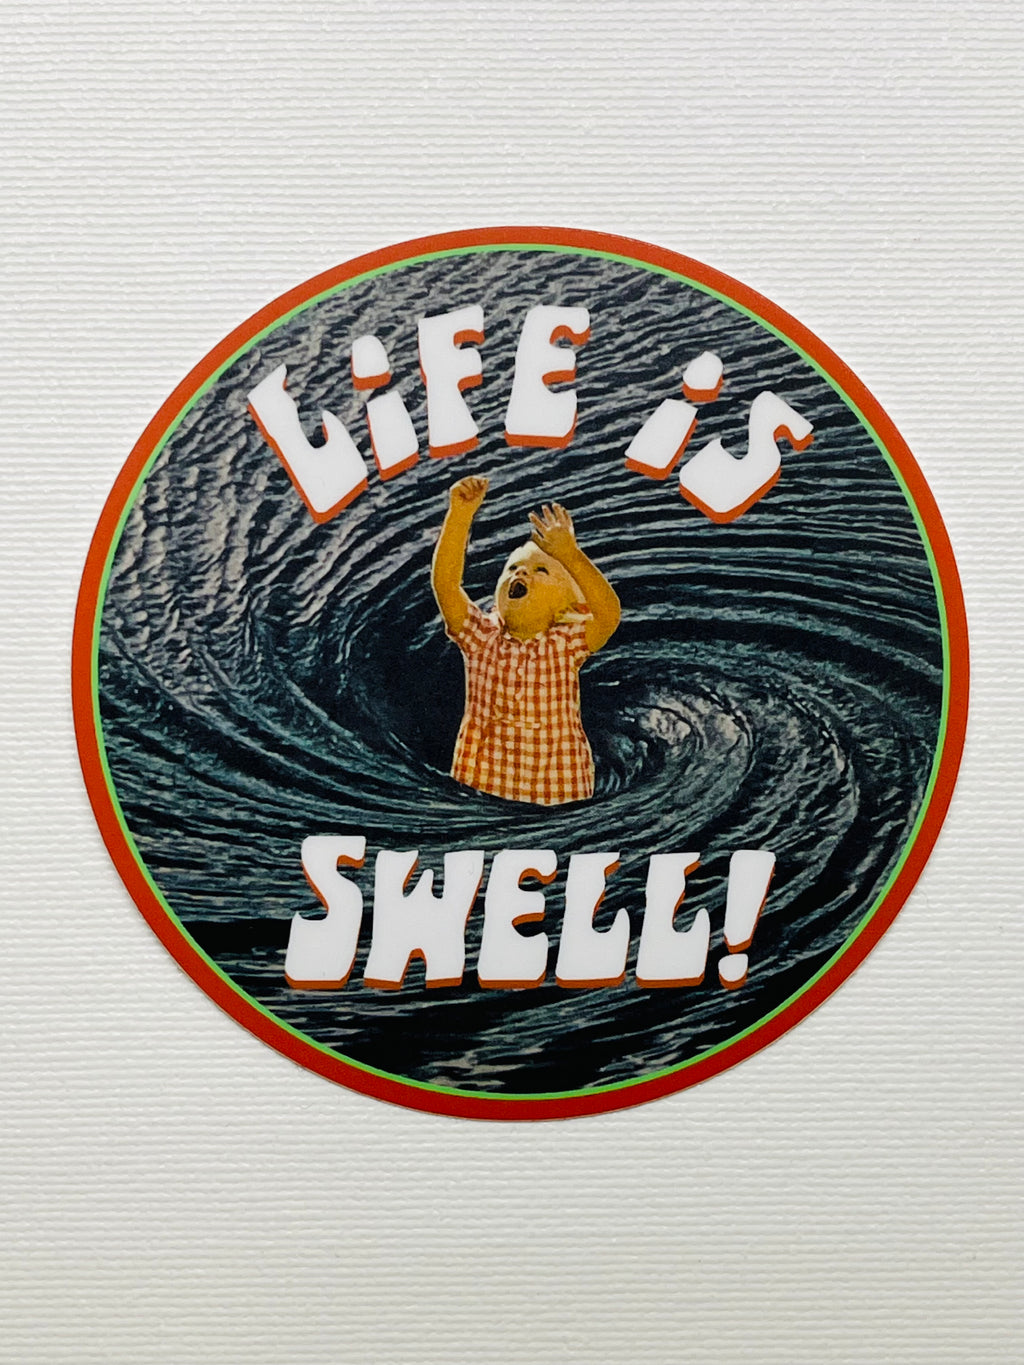 Life is Swell! Vinyl Sicker